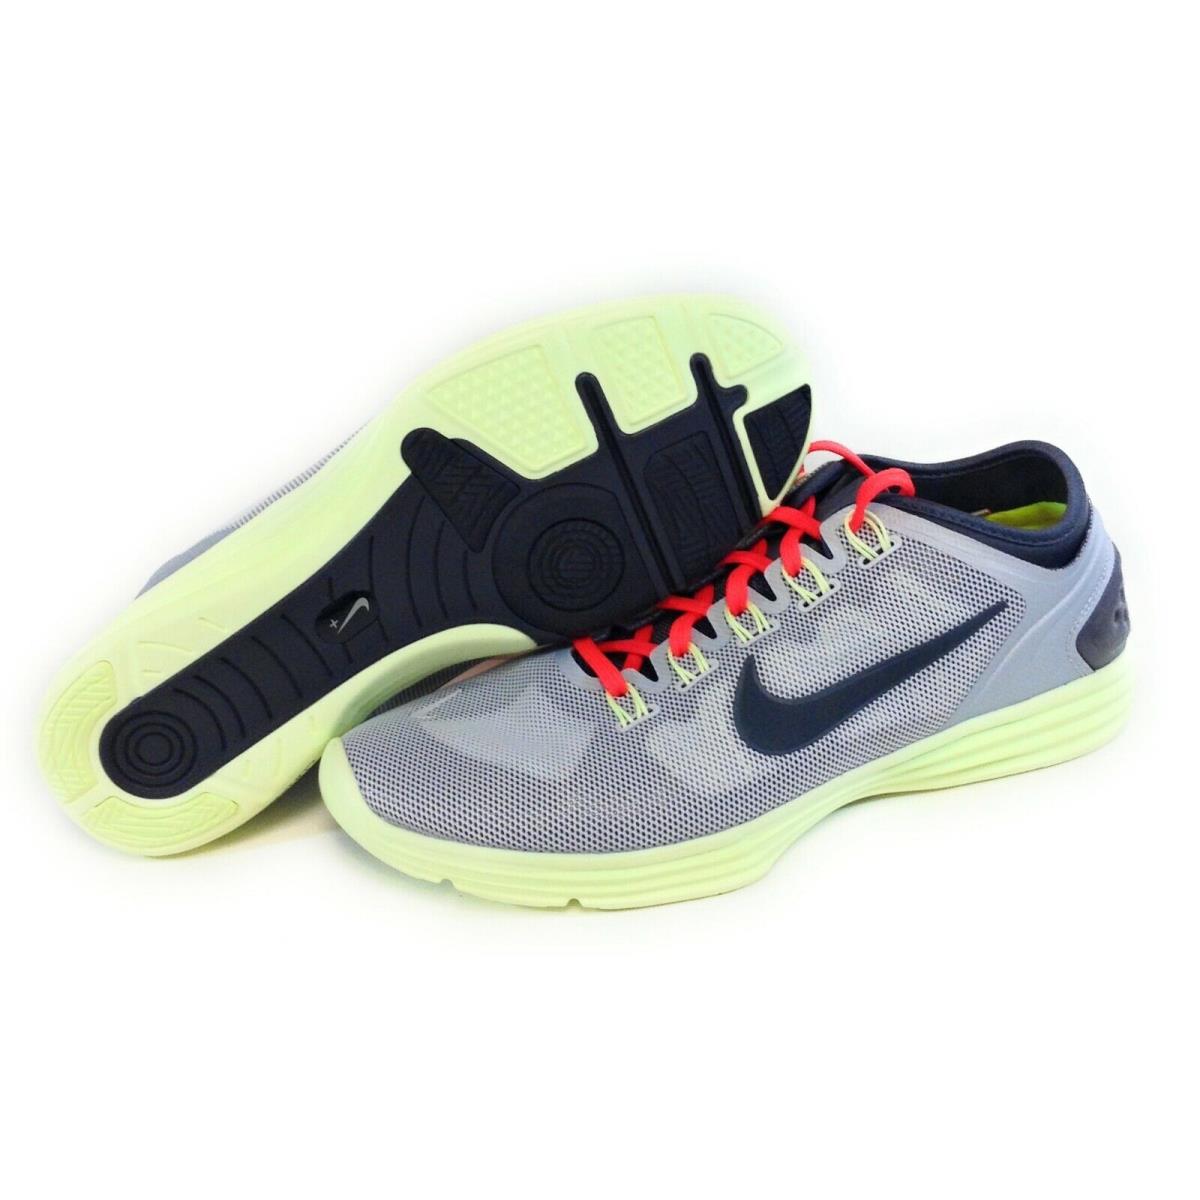 Womens Nike Lunarhyperworkout + 598395 003 Platinum Grey 2012 DS Sneakers Shoes - Platinum